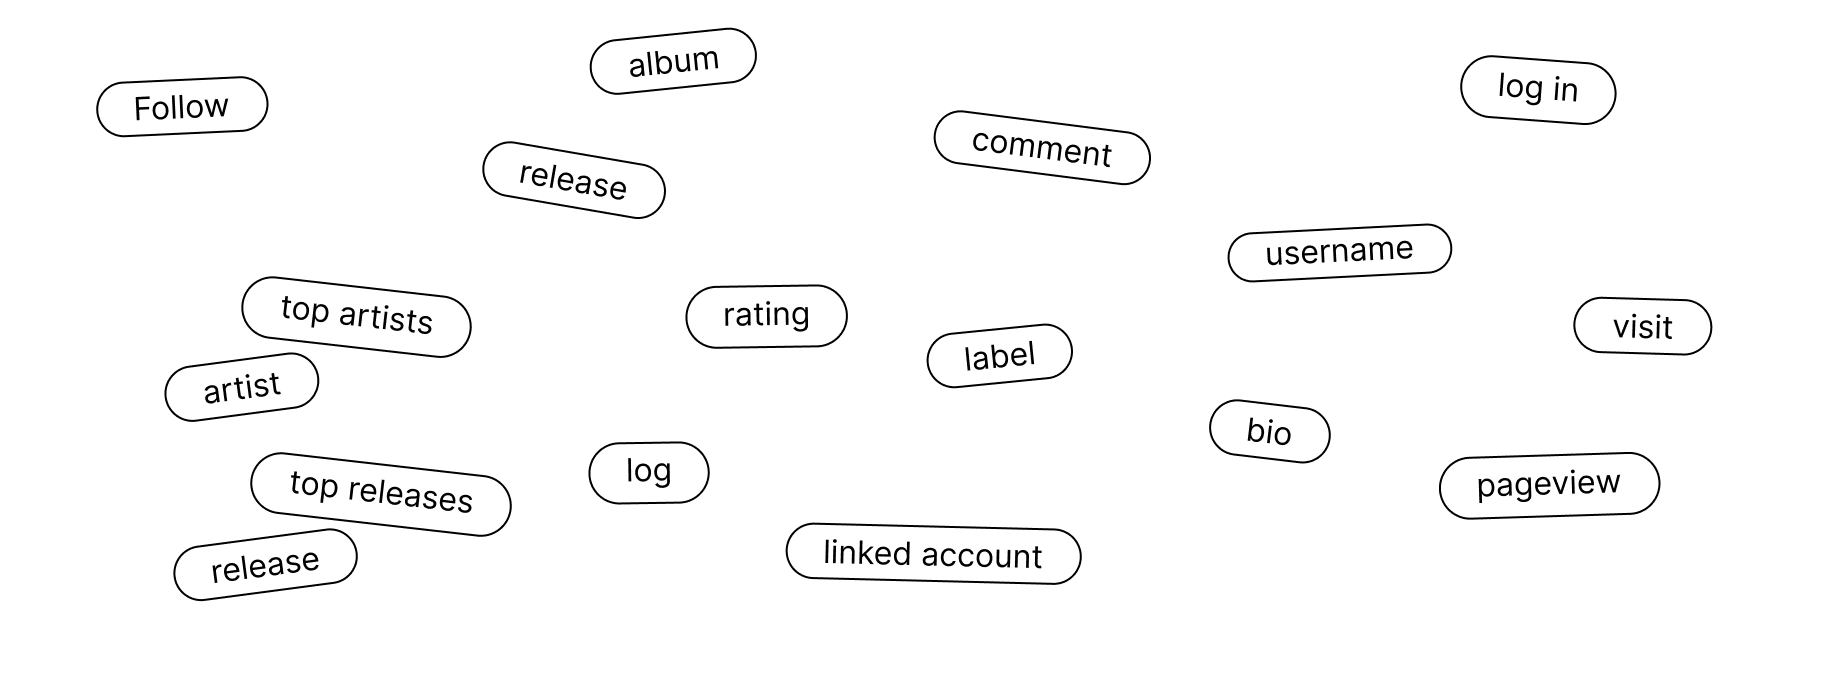 An illustration of Oscillator schemas